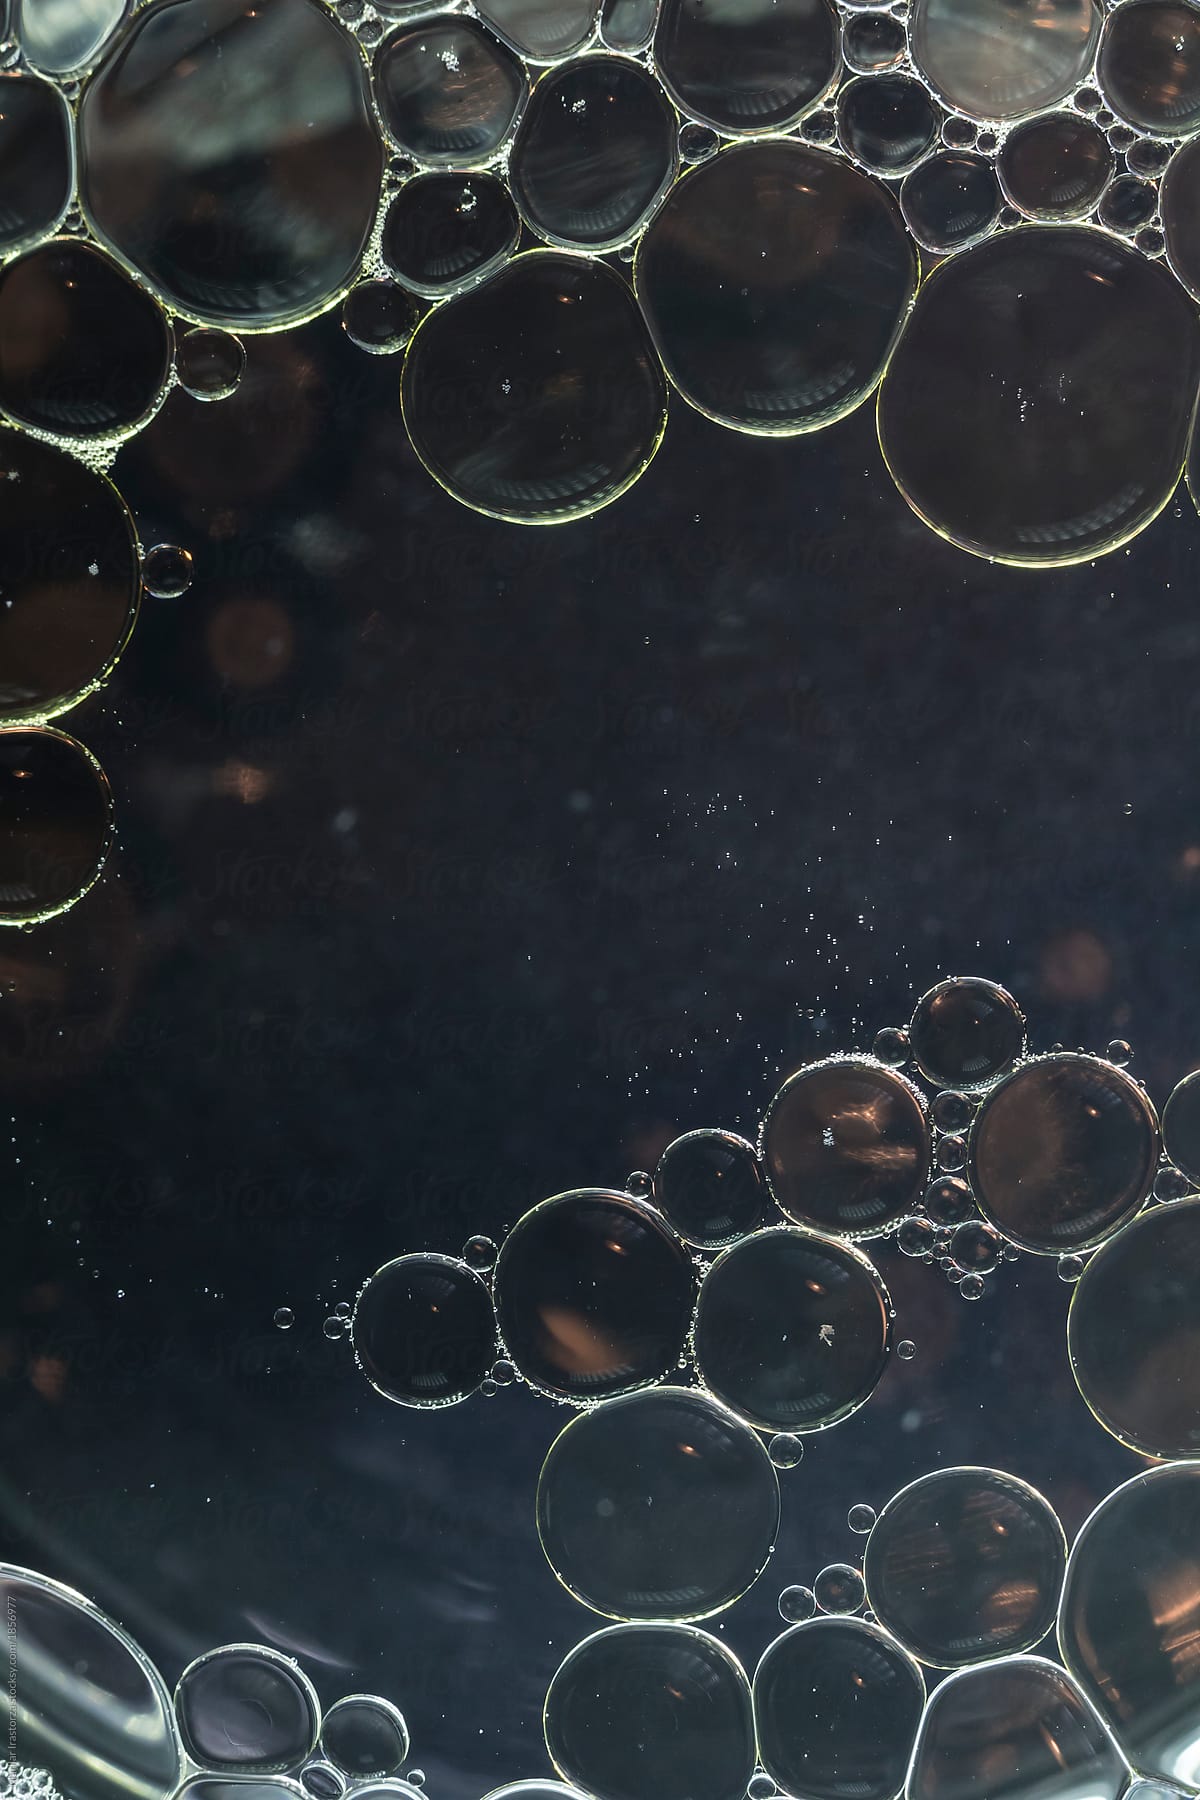 Droplets on a black background